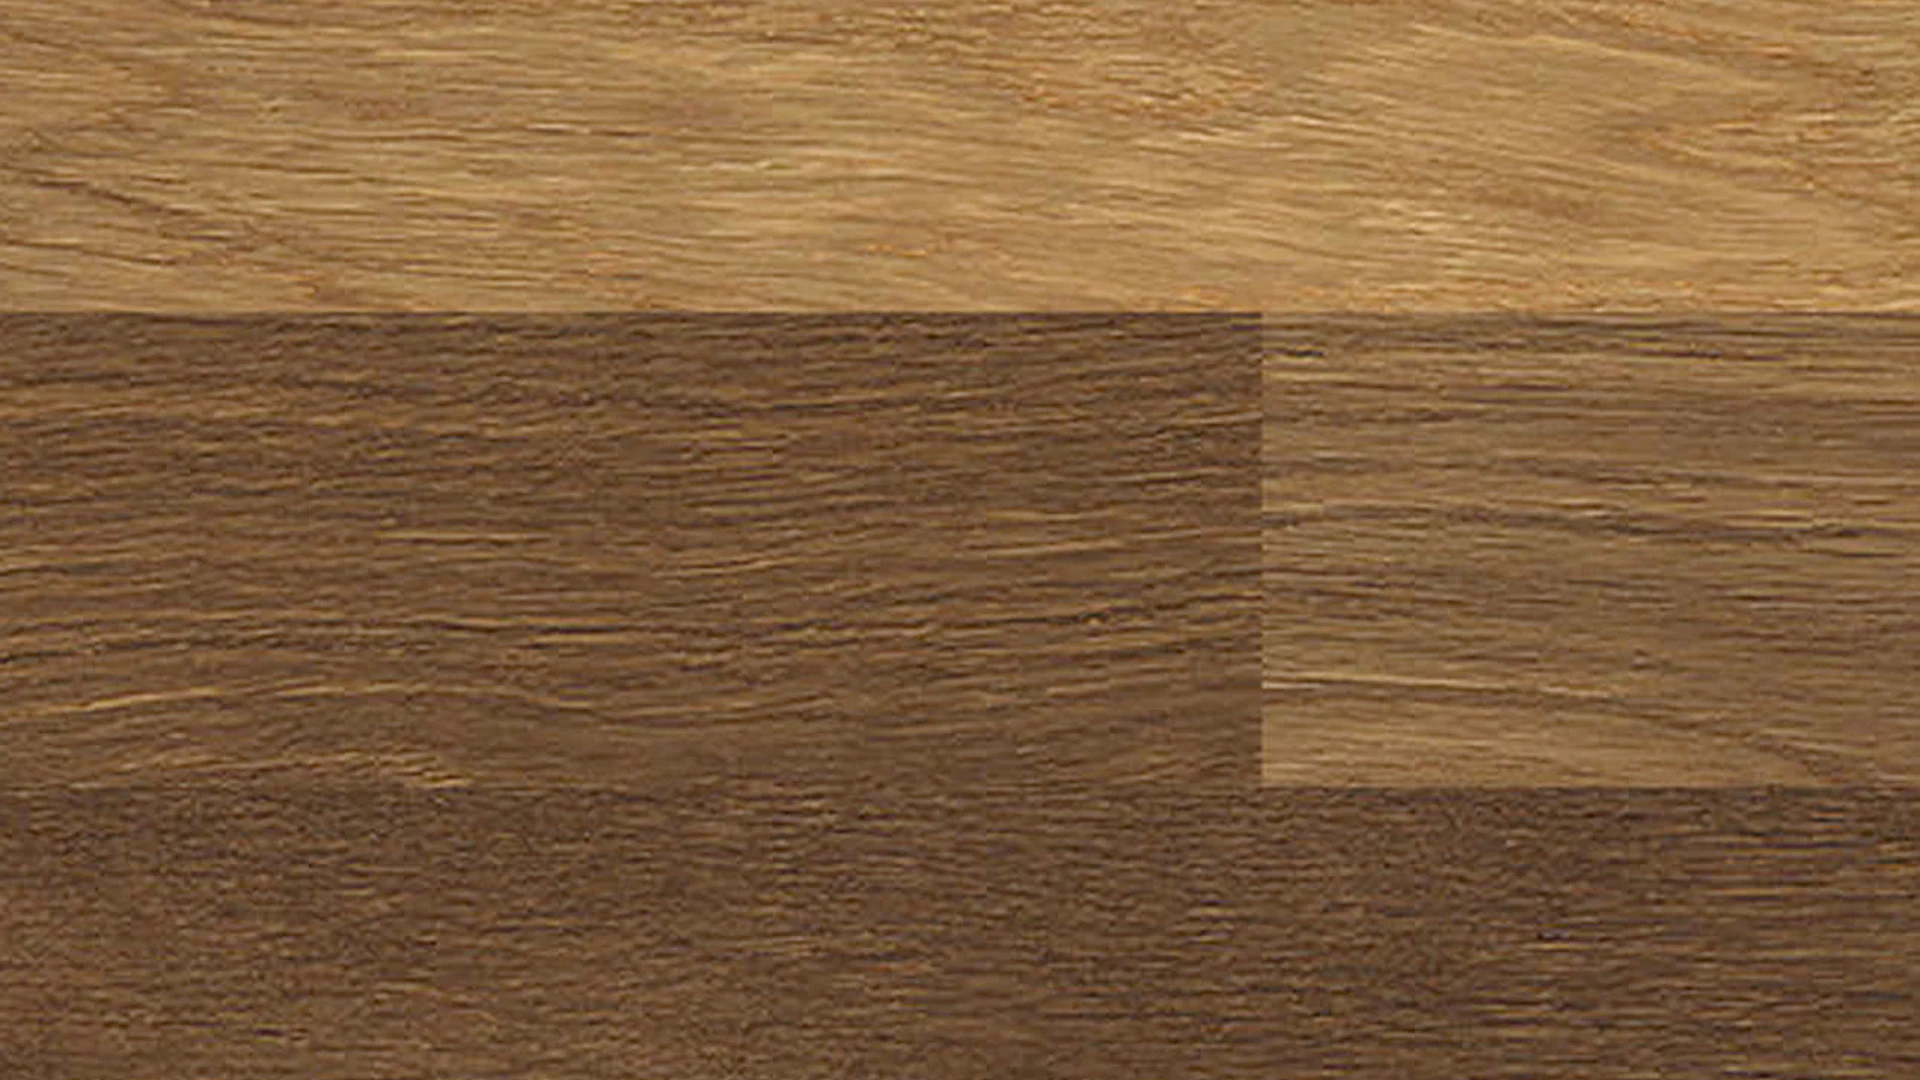 Haro Parquet Flooring - Series 4000 Stab Allegro naturaLin plus Smoked Oak Trend (540139)